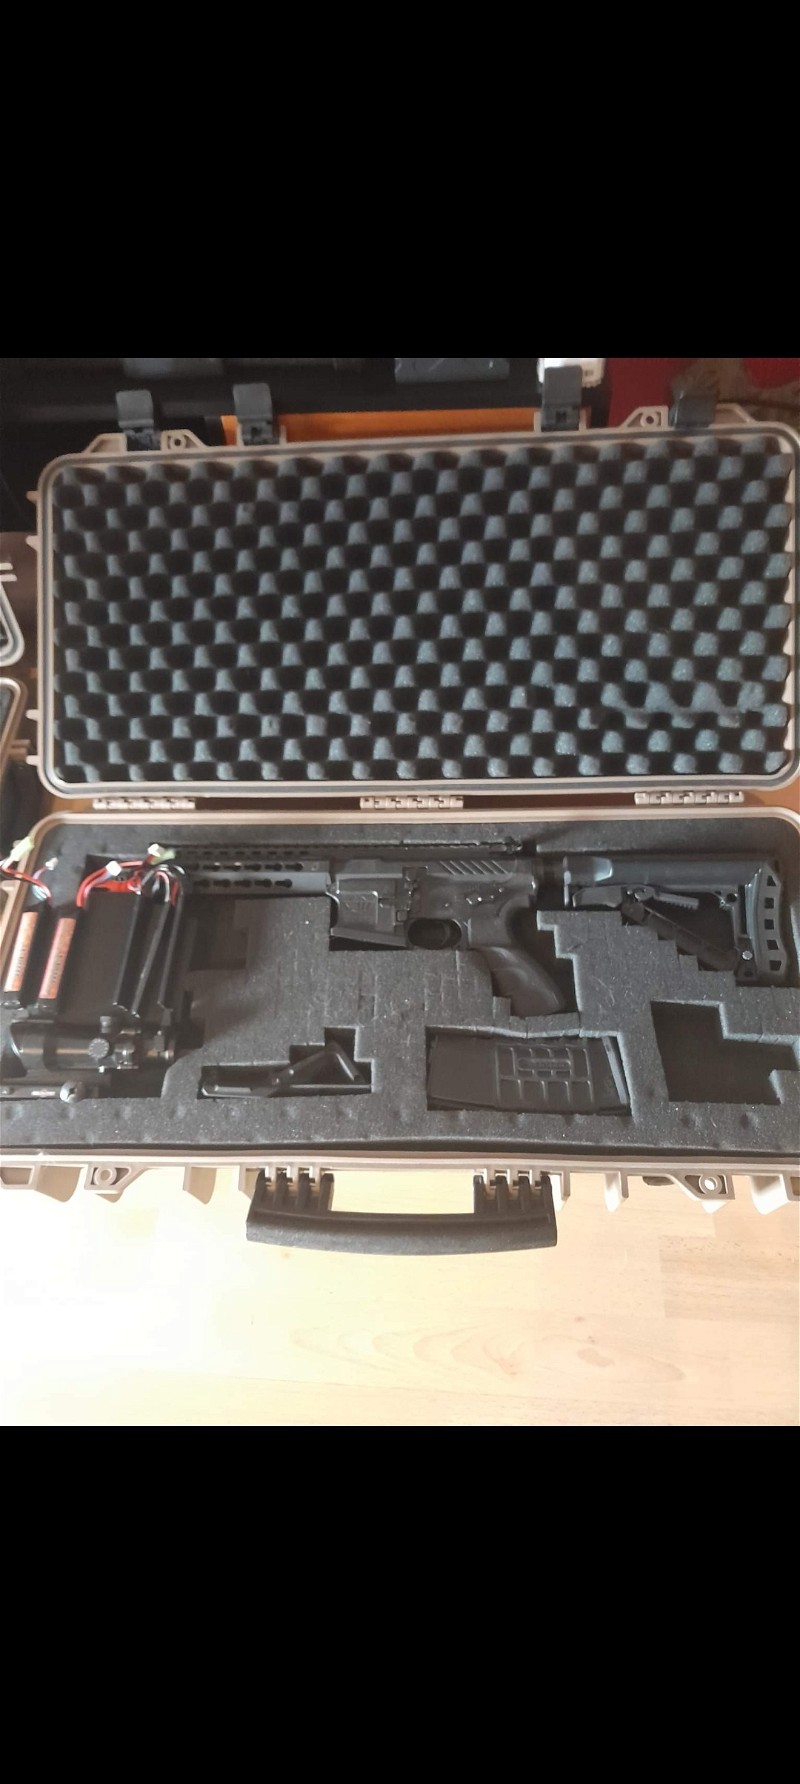 Image 1 pour G&g cm16 srs + case + red dot scope and batterijen.